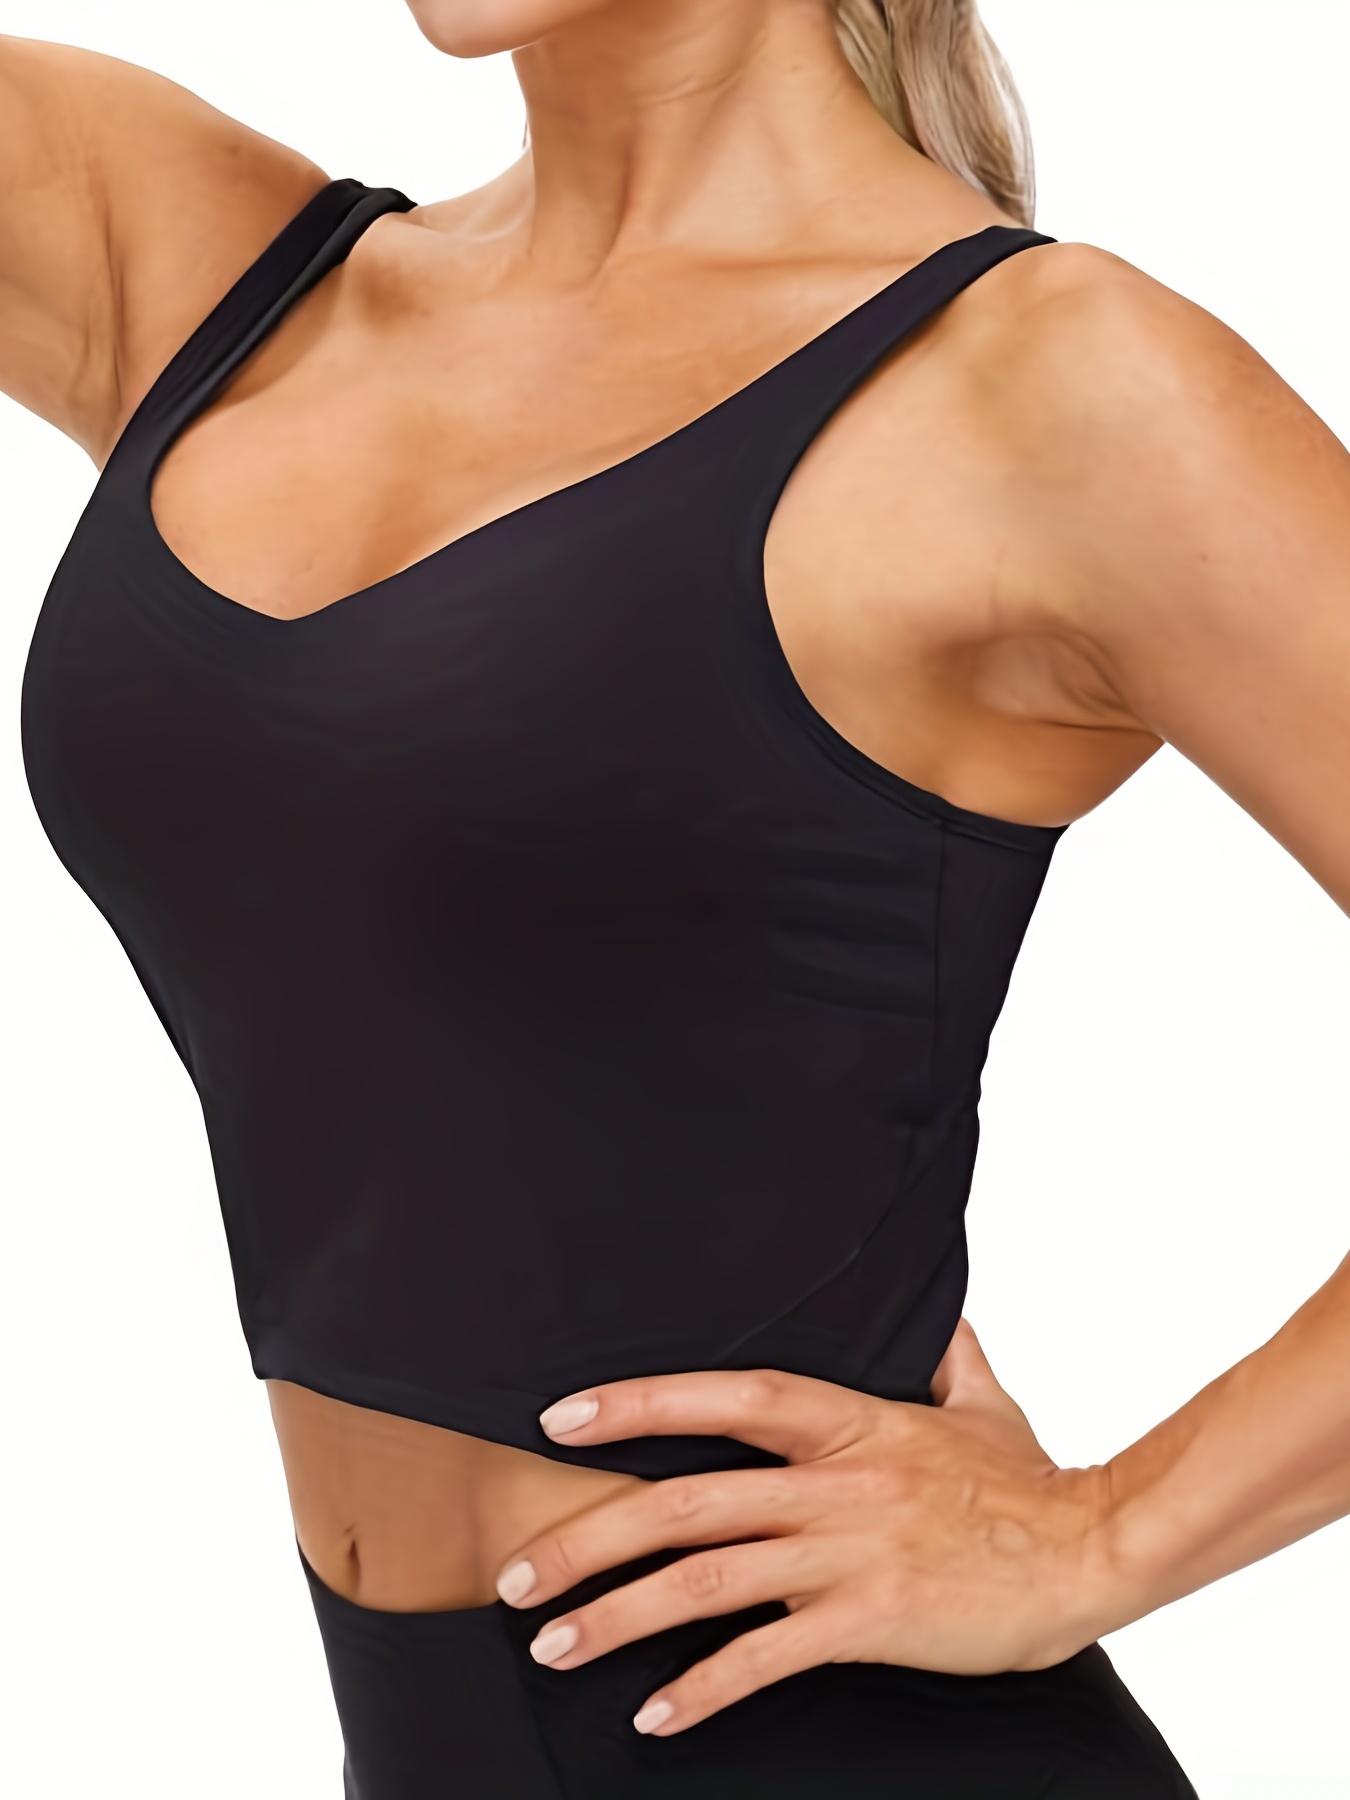  Kamo Fitness Ellyn High Neck Tank Top Sports Bra For Women  Soft Padded Built-in Bra Longline Yoga Running Workout